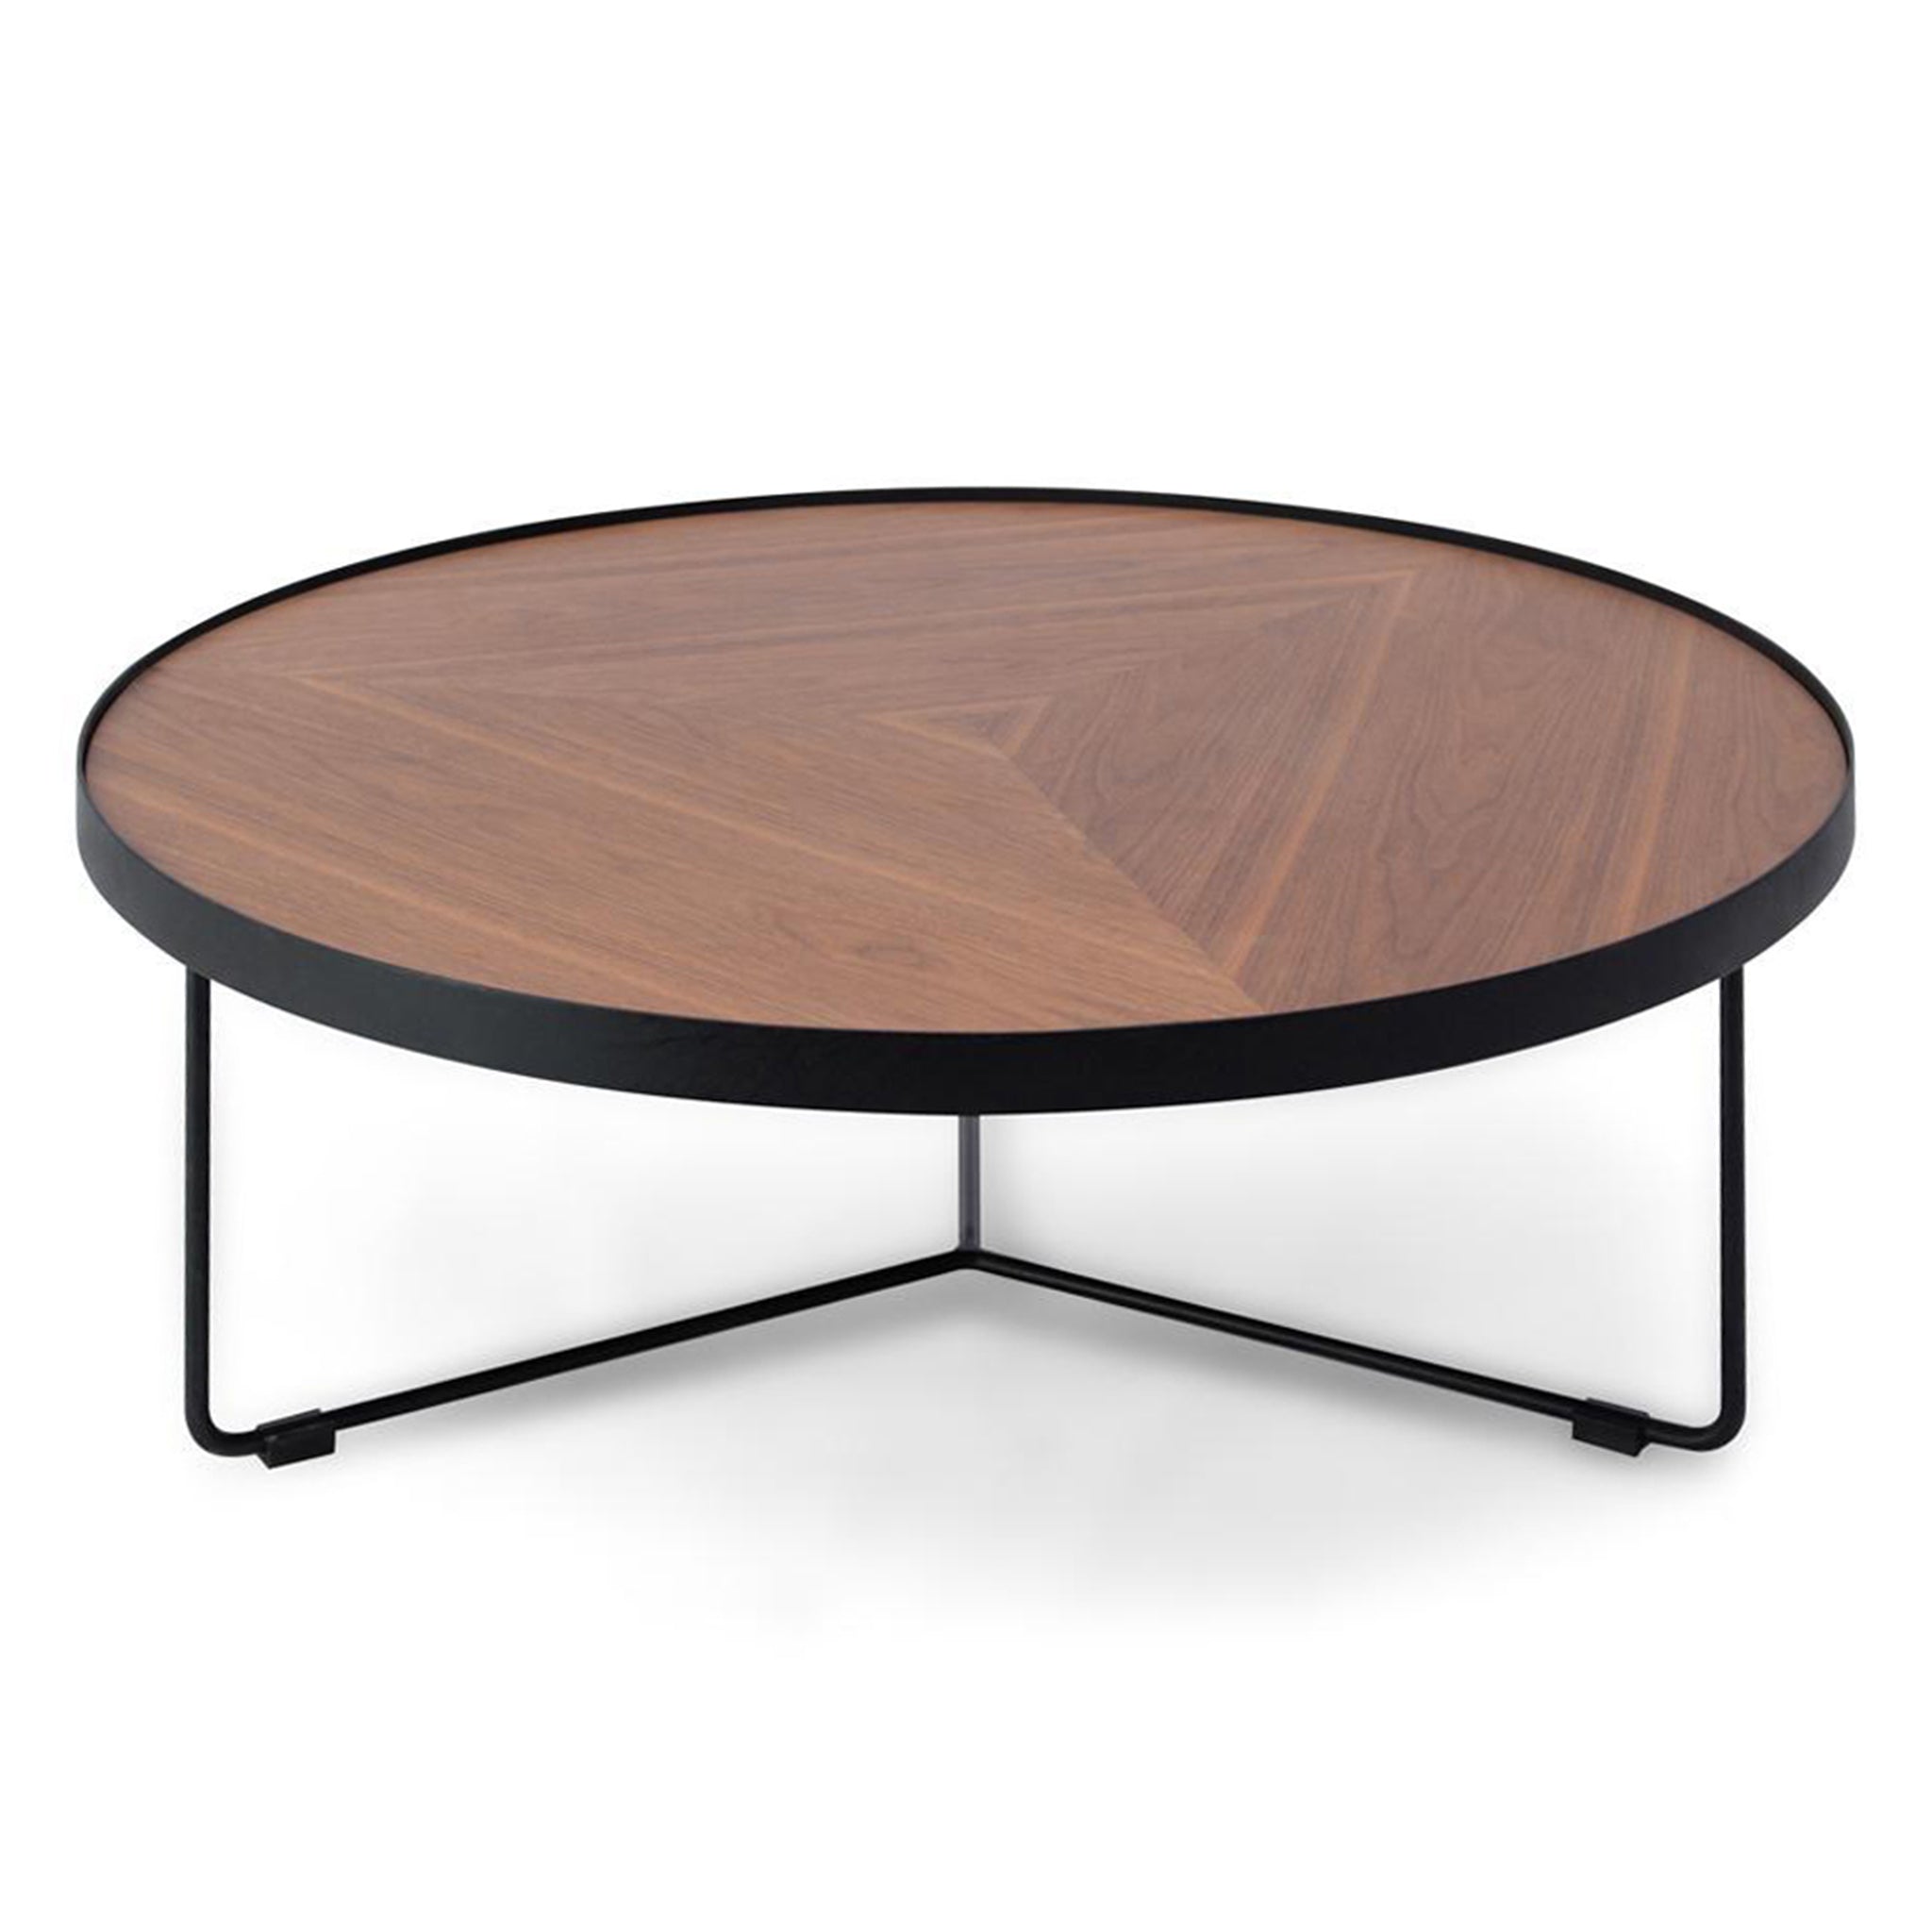 90cm Round Coffee Table_1